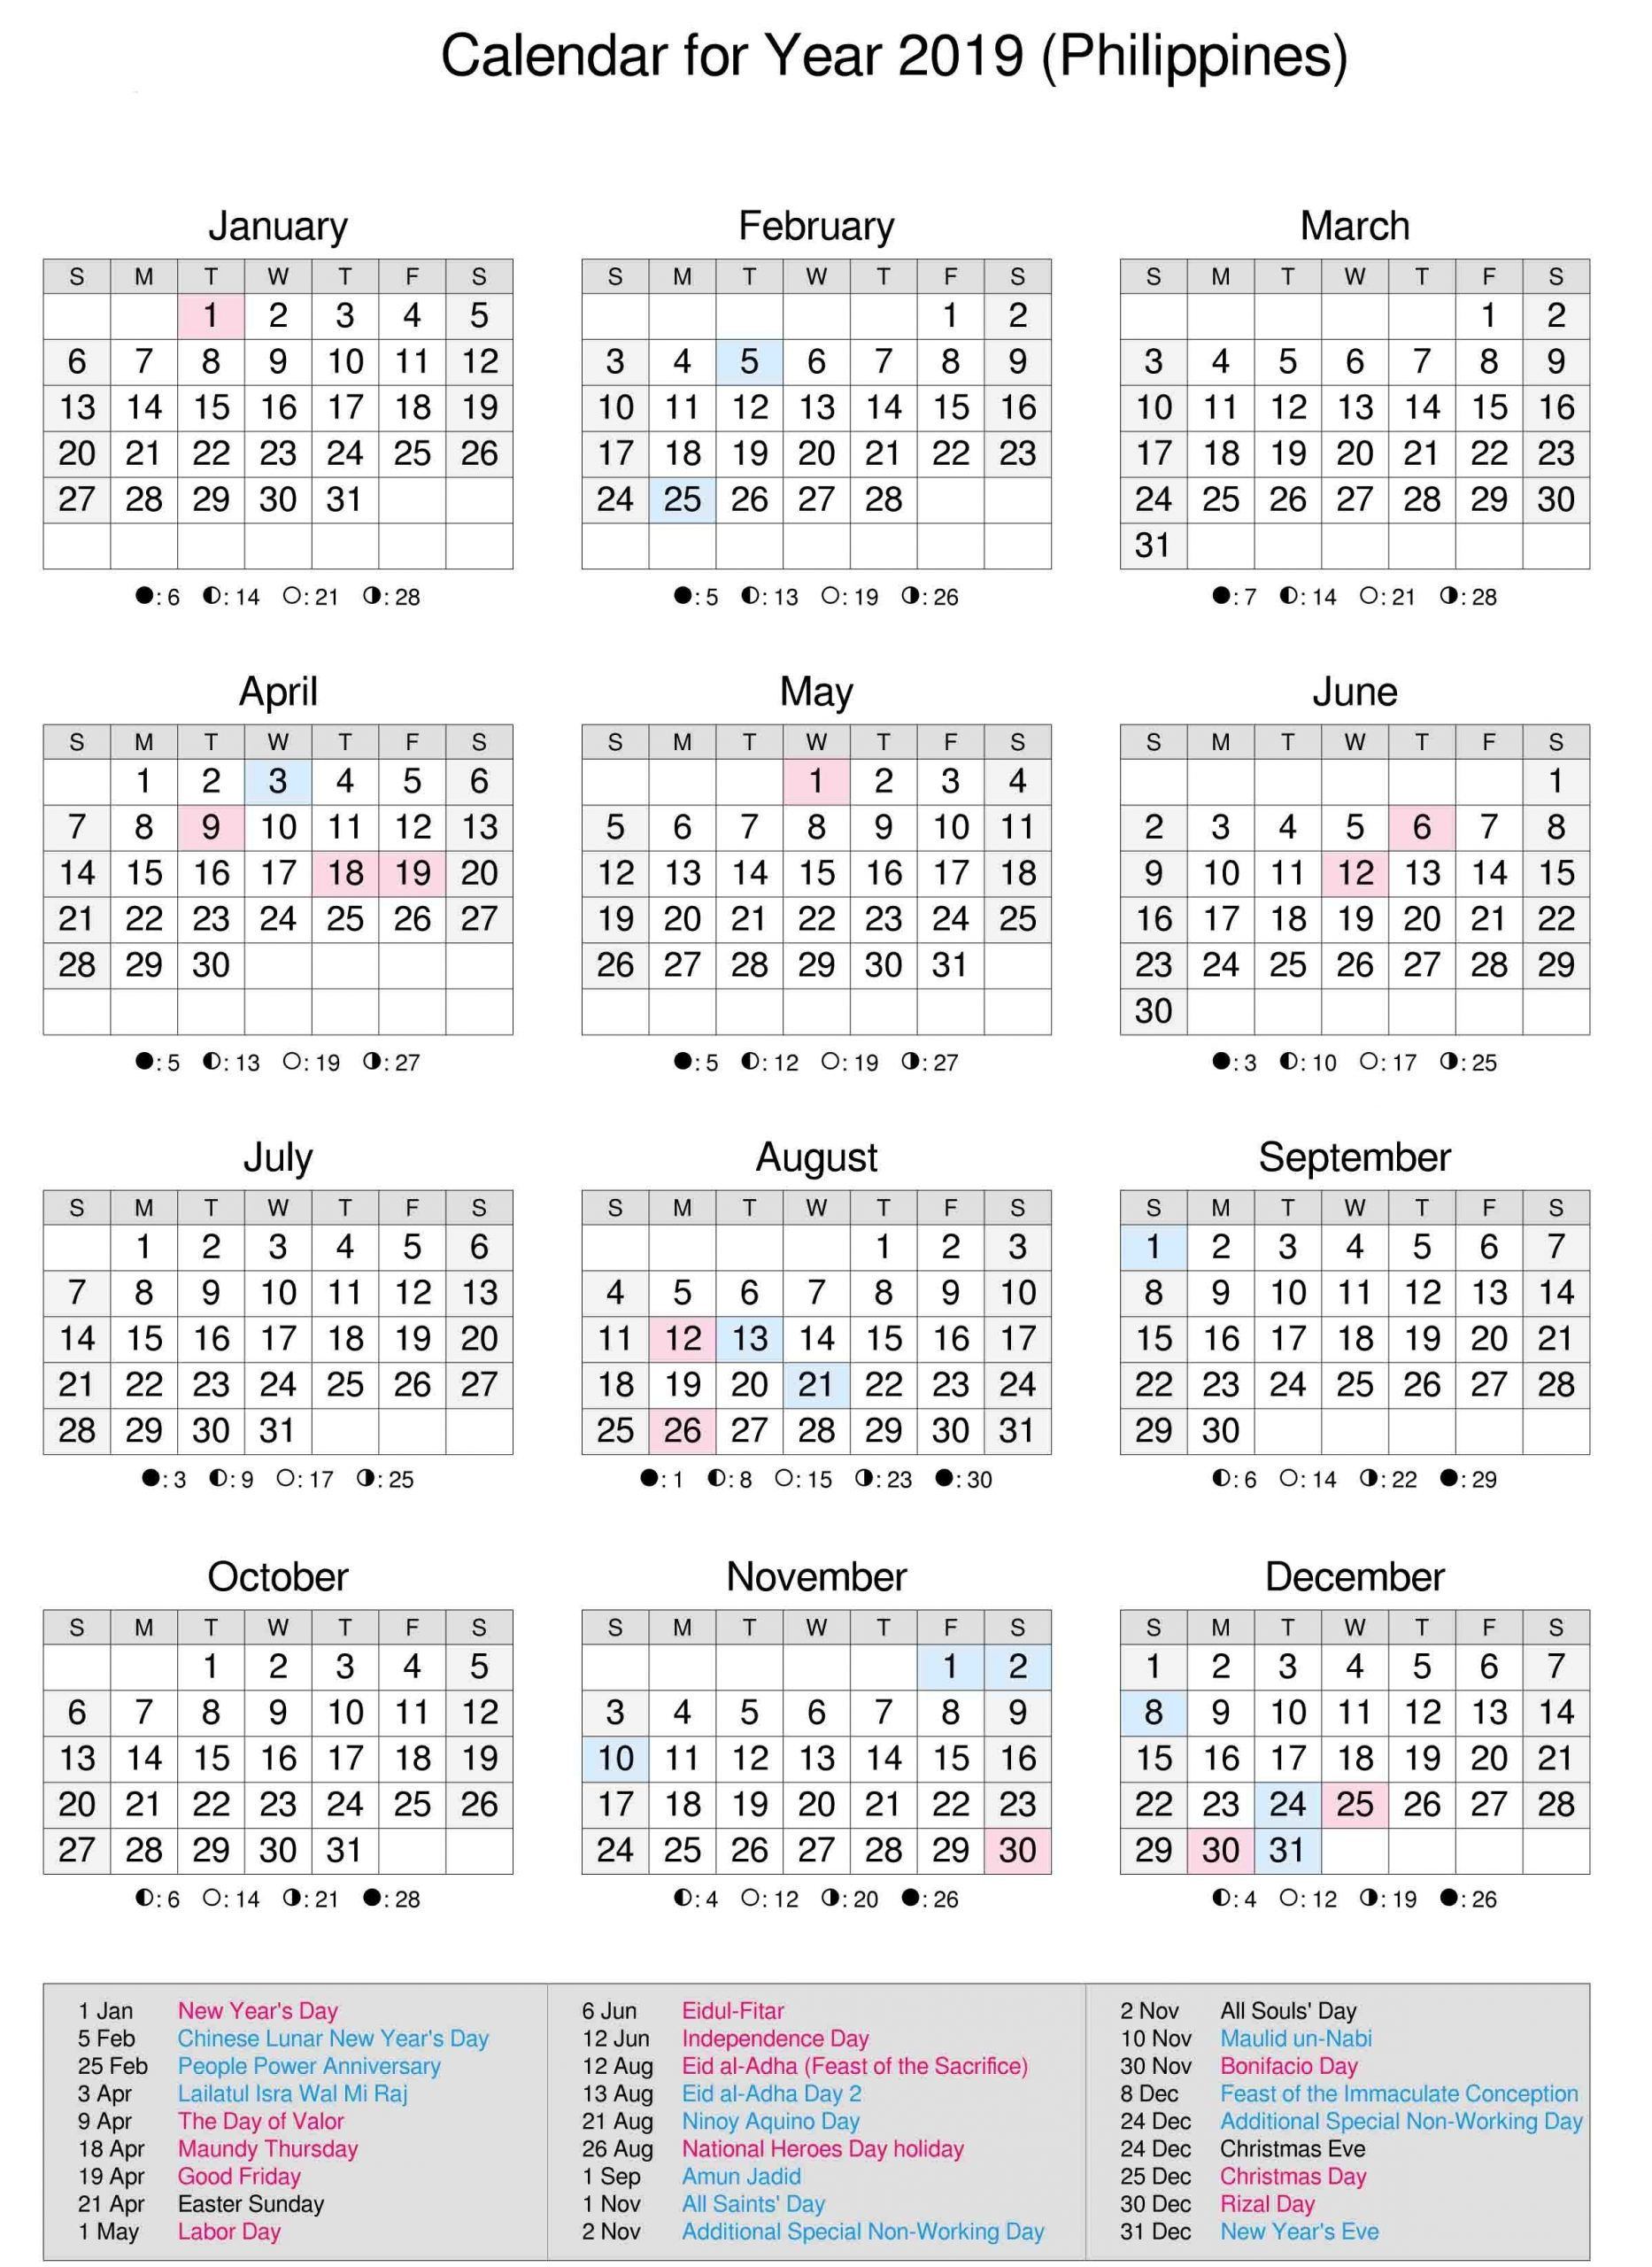 Get 2021 Calendar Philippine Holidays | Best Calendar Example December 2021 Calendar Philippines